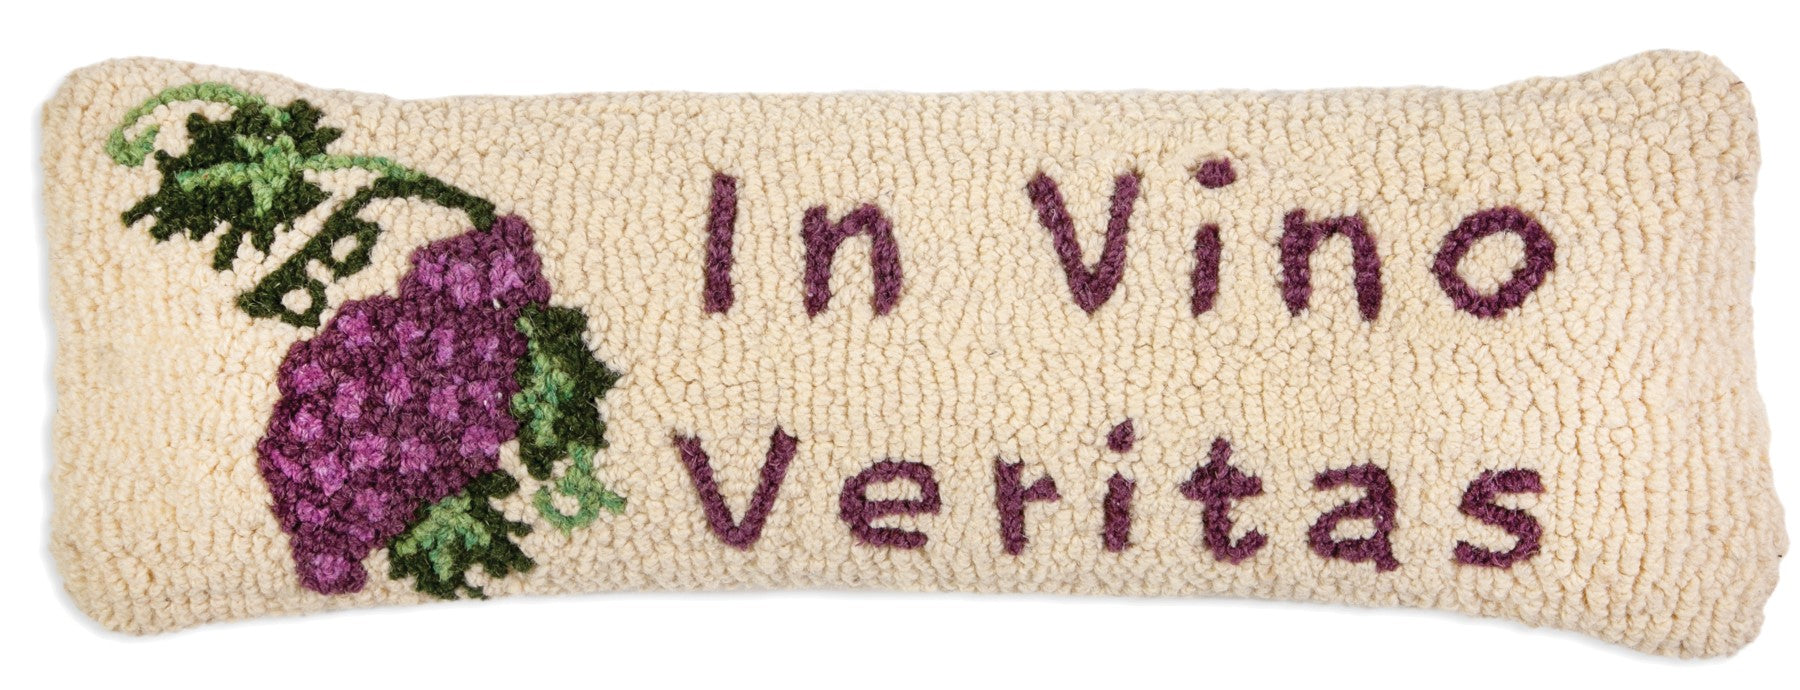 In Vino Veritas - Hooked Wool Pillow